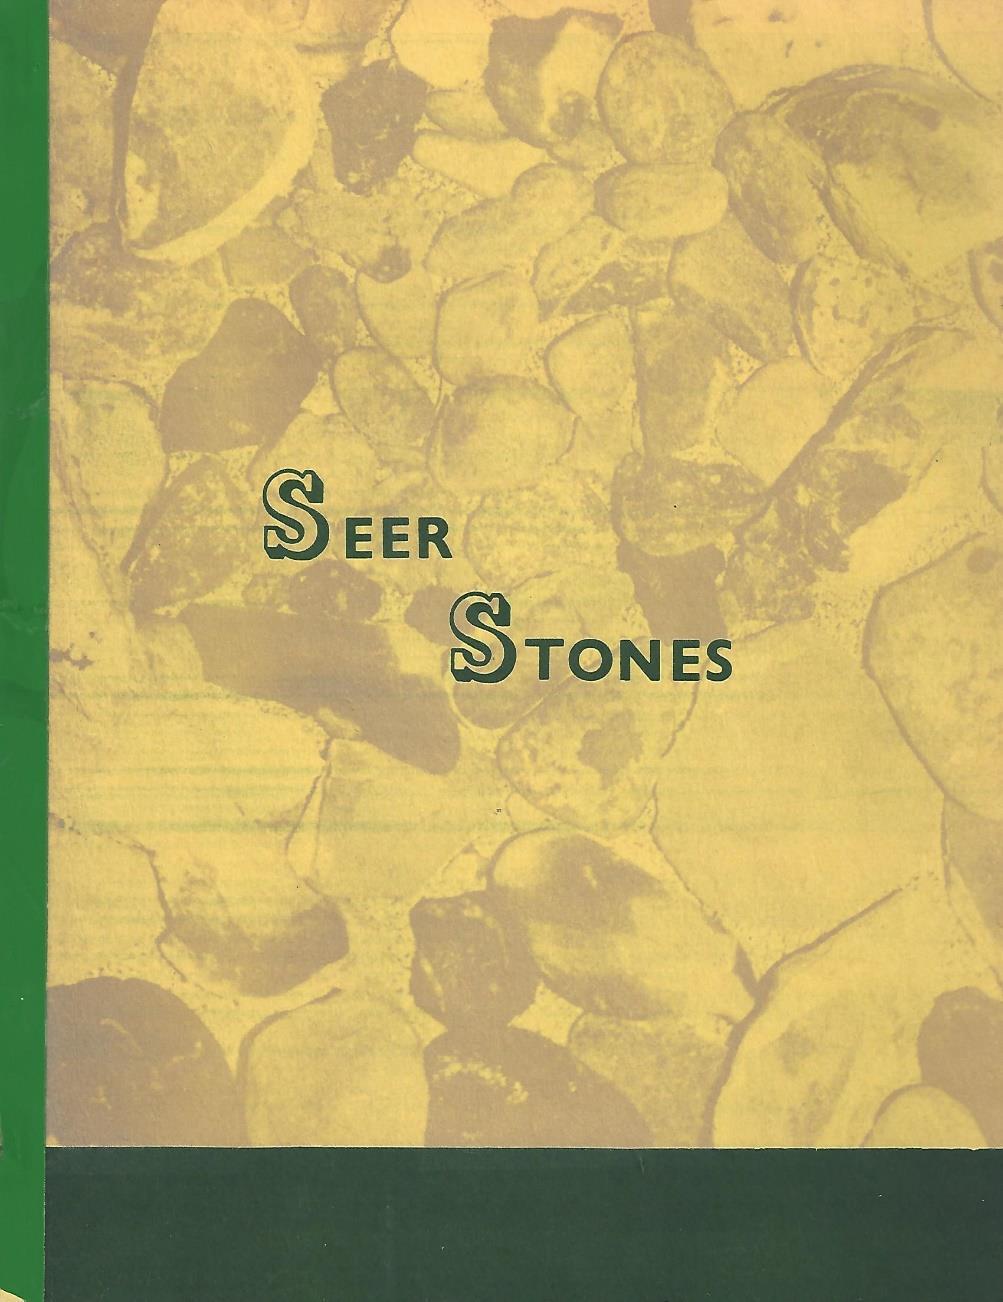 Mimeographed Work by Outspoken Fundamentalist 10- Kraut, Ogden. Seer Stones. [Dugway, UT]: [Pioneer Press], [1967]. First Edition. 37pp.